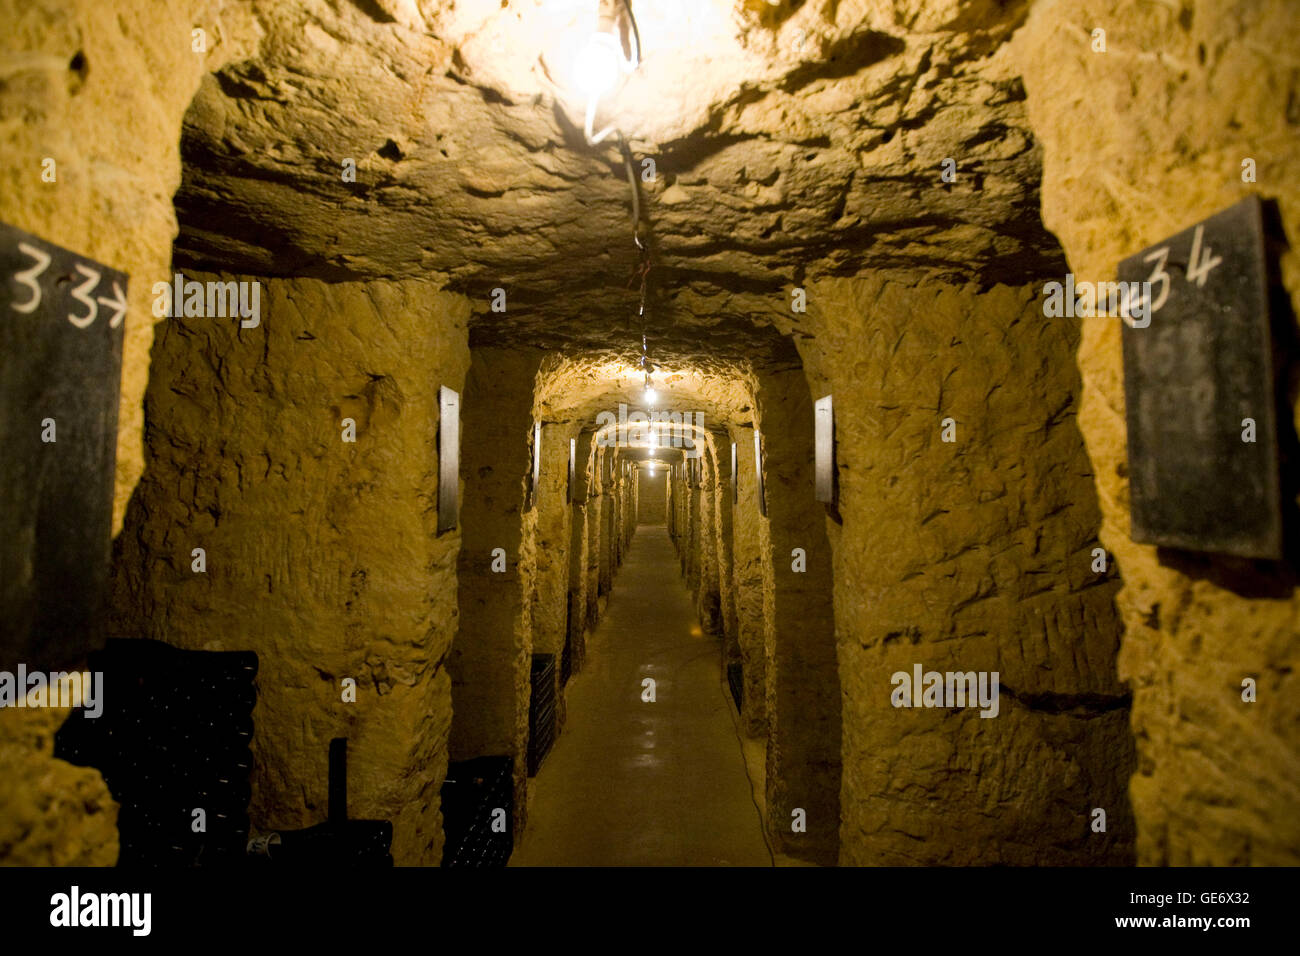 View of winemaker Daniel Jarry cellars in Vouvray, France, 26 June 2008. Stock Photo